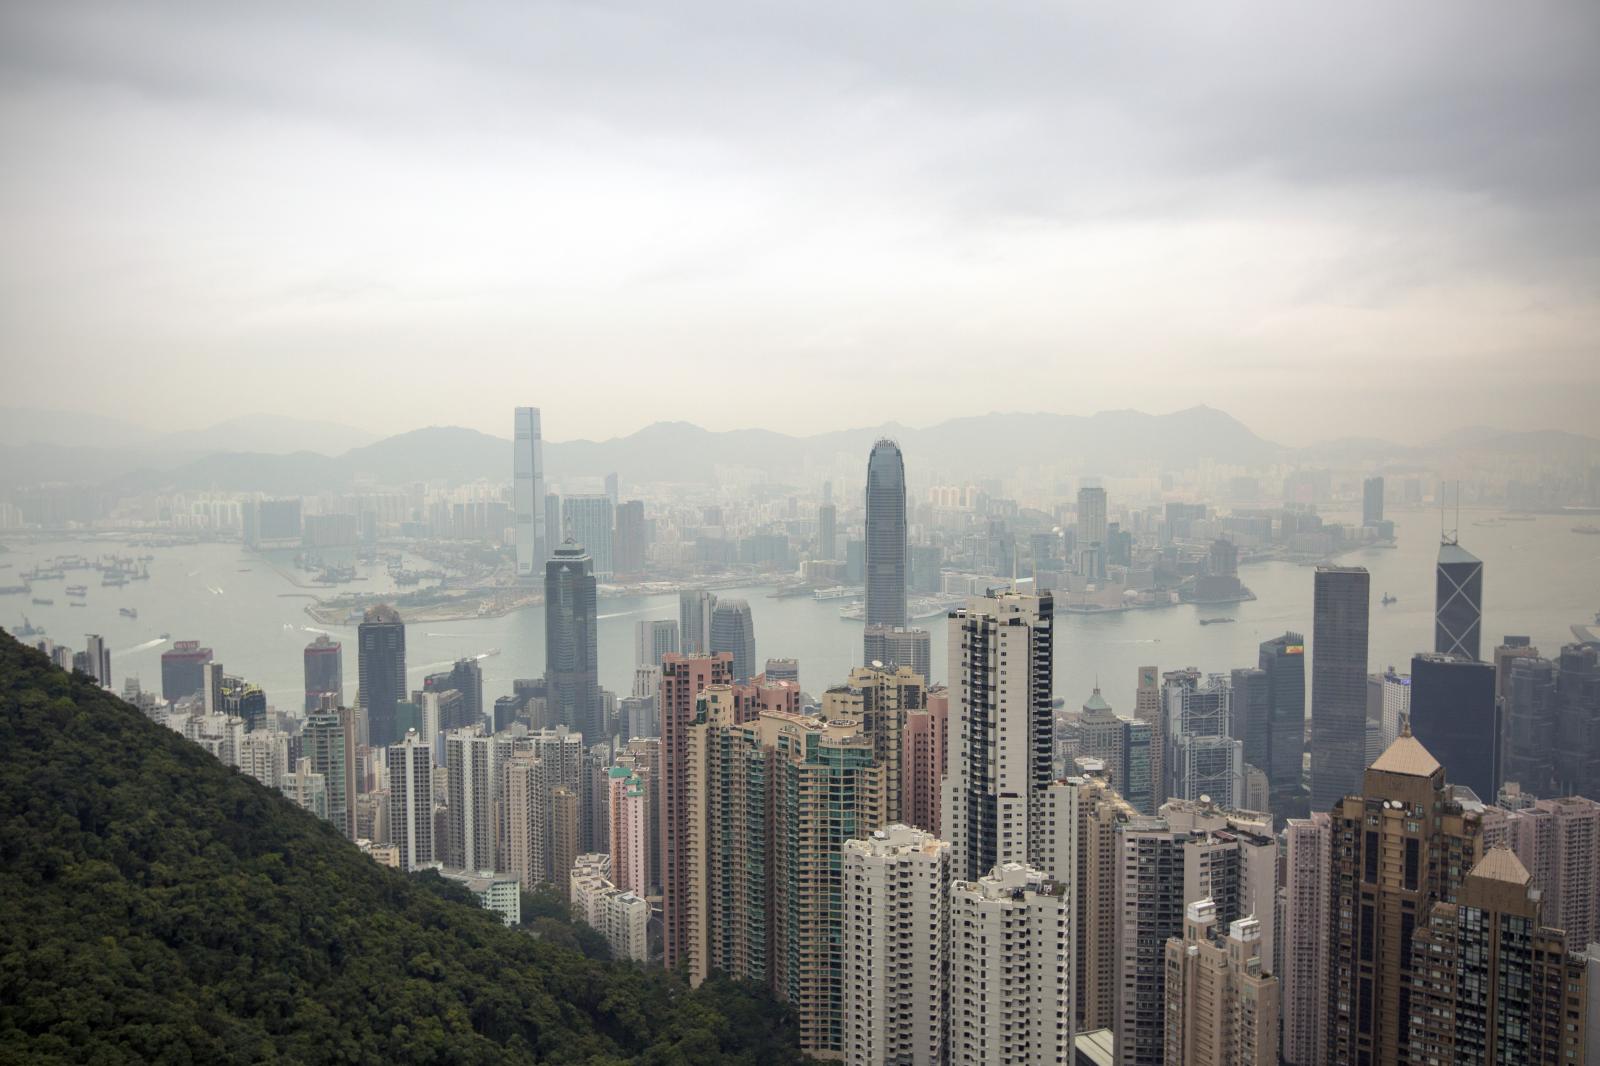 Honk Kong skyline | Buy this image